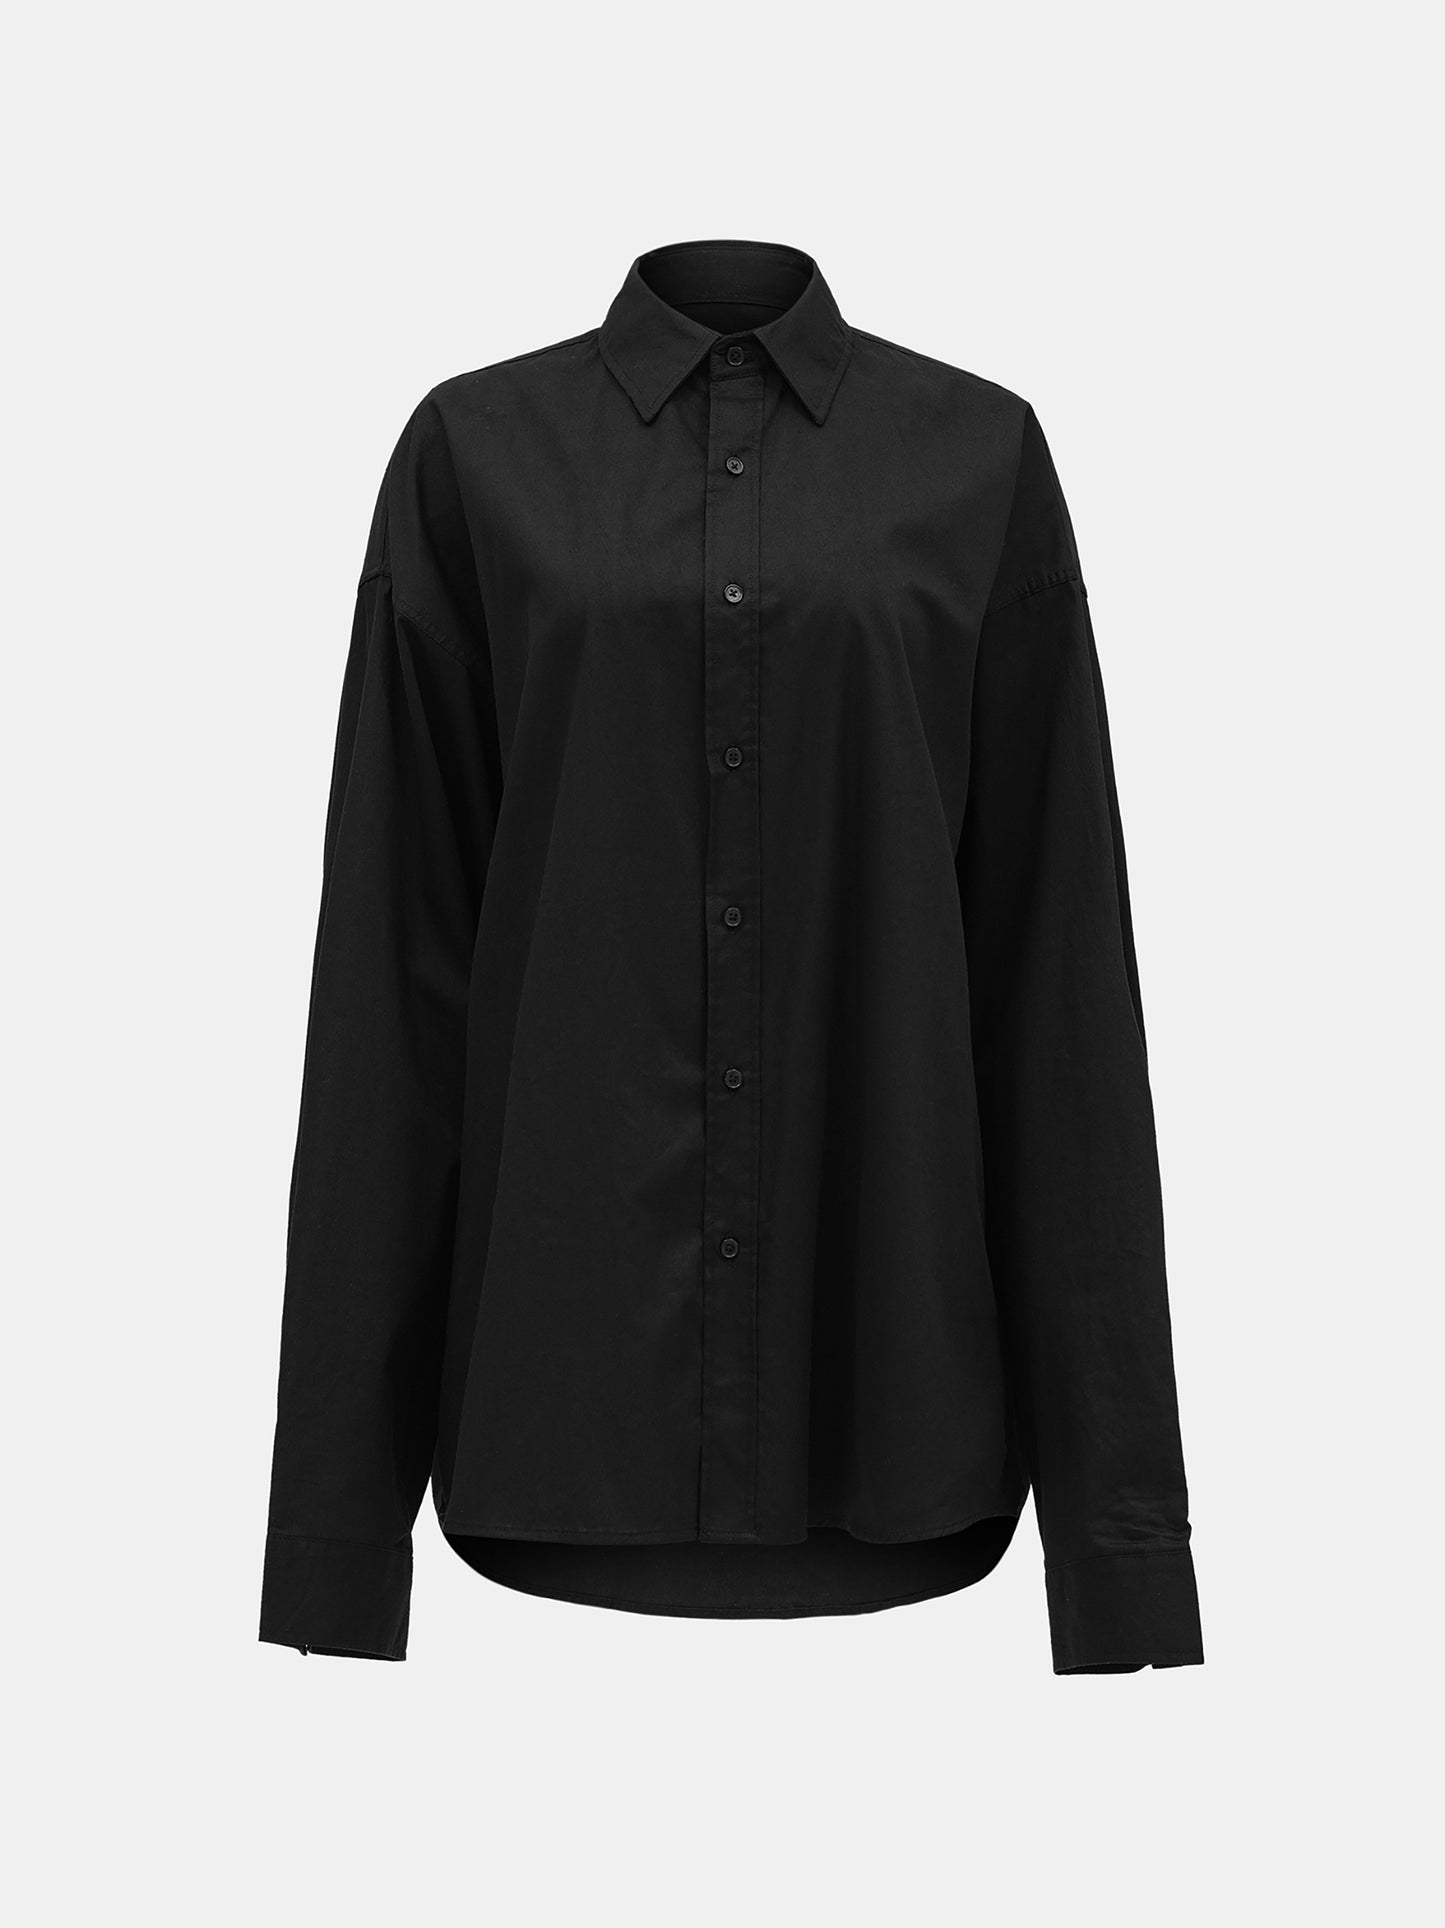 Over-Fit Cotton Shirt, Black